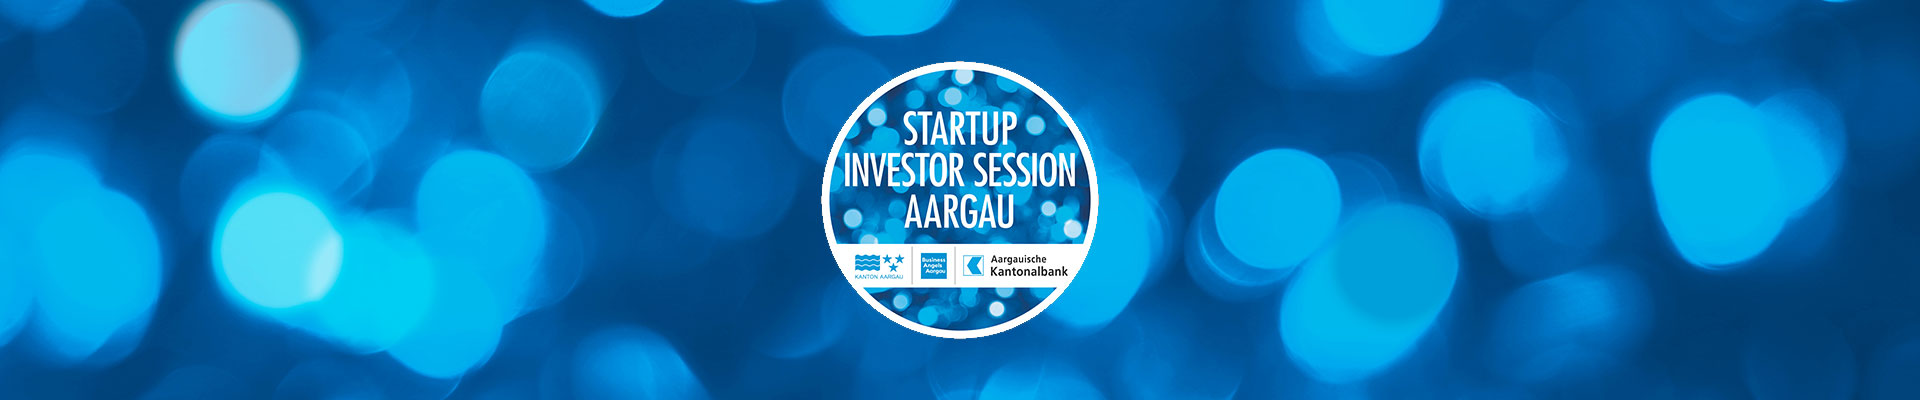 5. Startup Investor Session Aargau